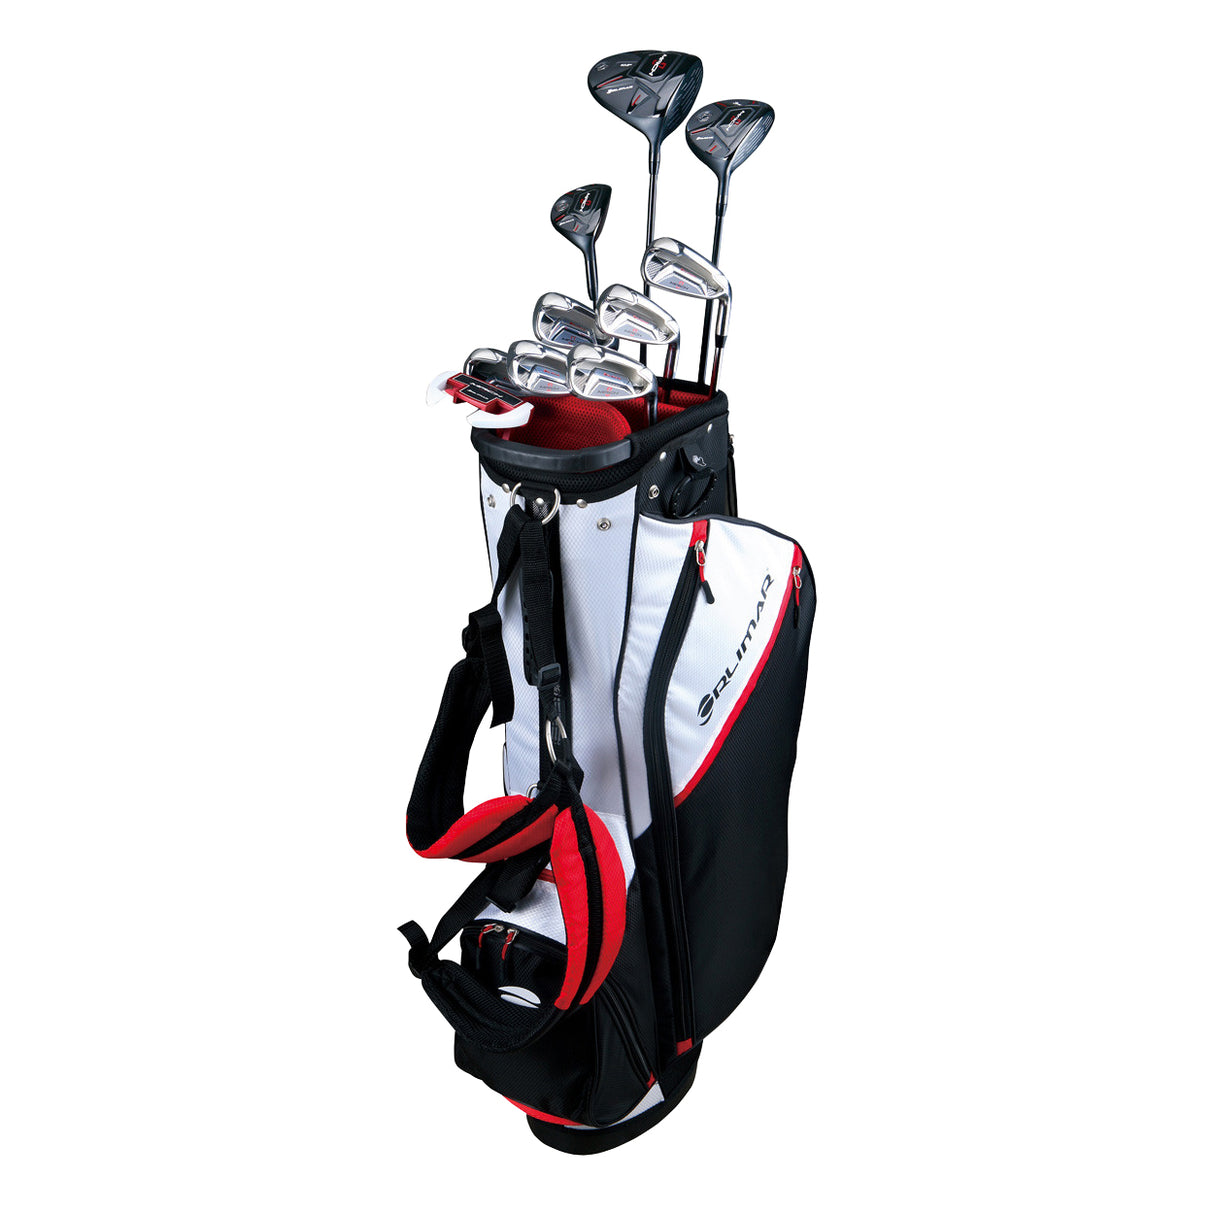 Orlimar Golf Men's Mach 1 Premium Complete Set with Stand Bag